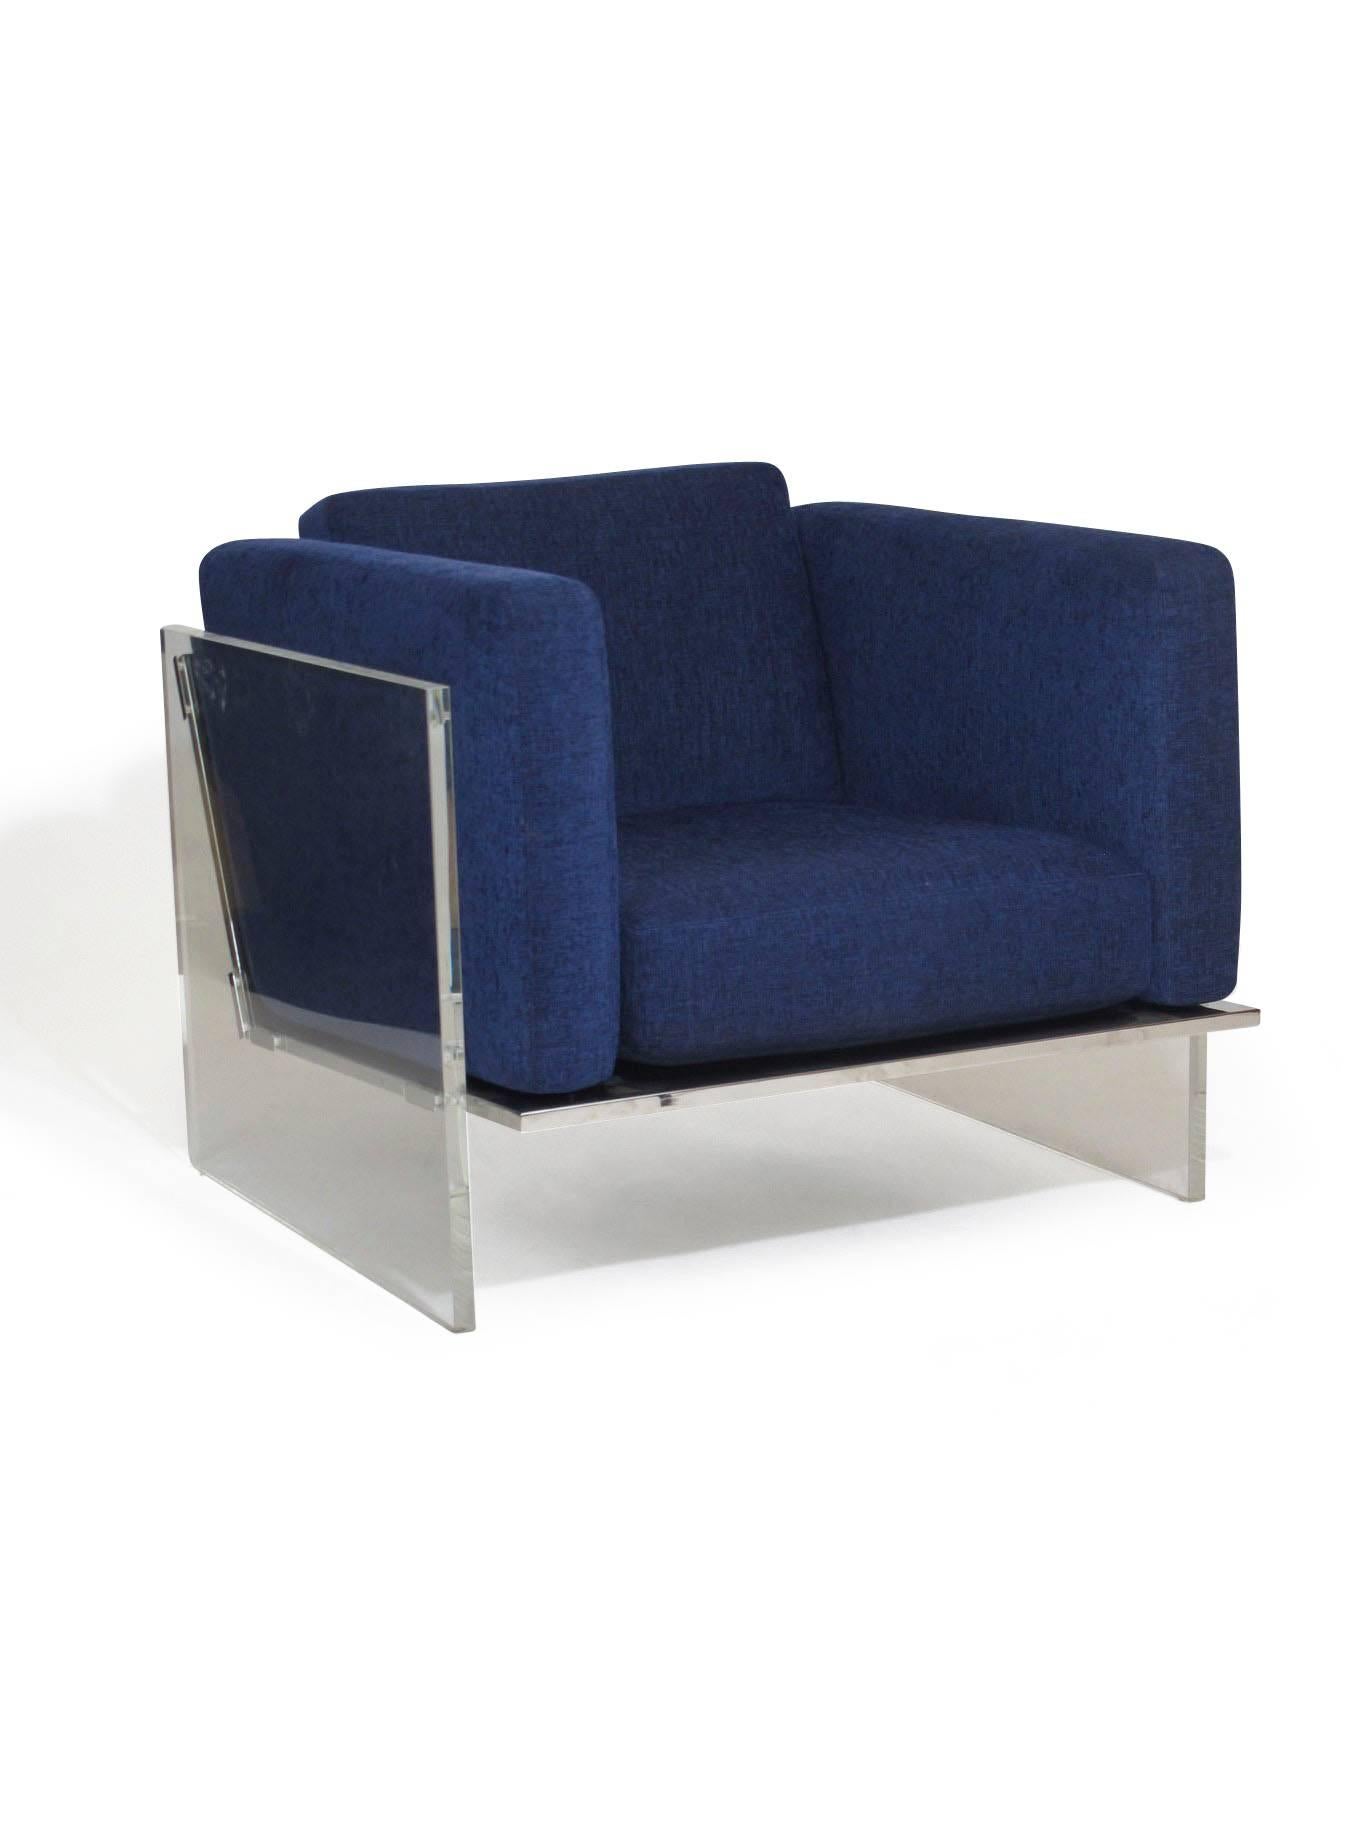 Mid-Century Modern Milo Baughman for Thayer Coggin Lucite Chrome Lounge Chair in Navy